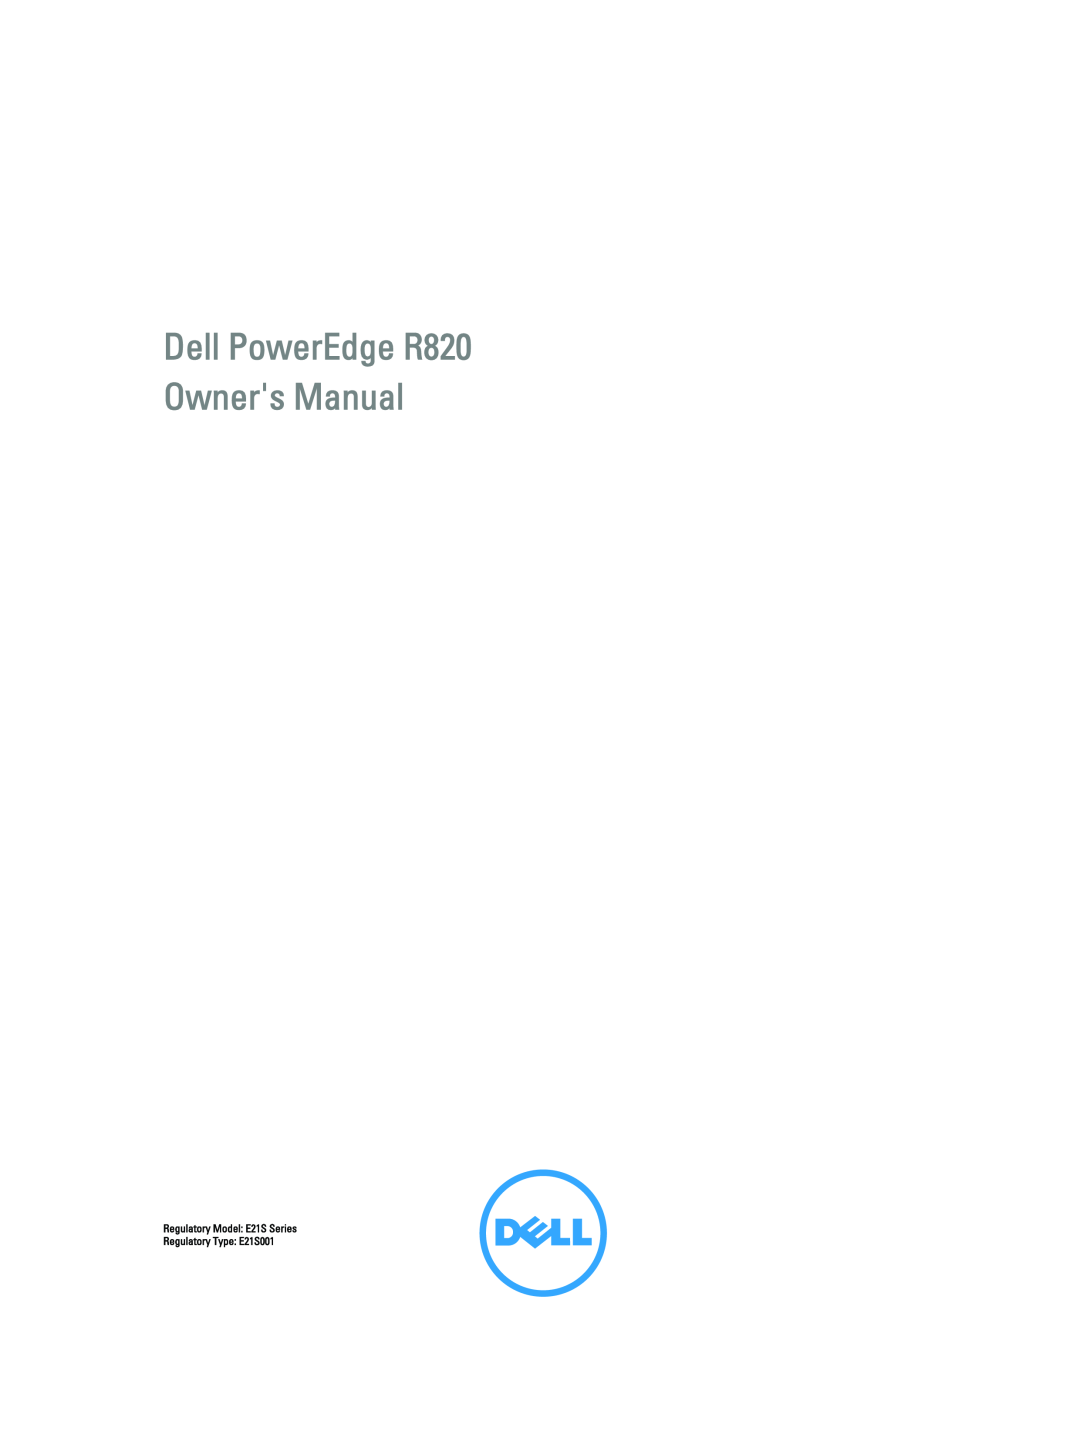 Dell manual Dell PowerEdge R820 Getting Started Guide, Regulatory Model E21S Series Regulatory Type E21S001 